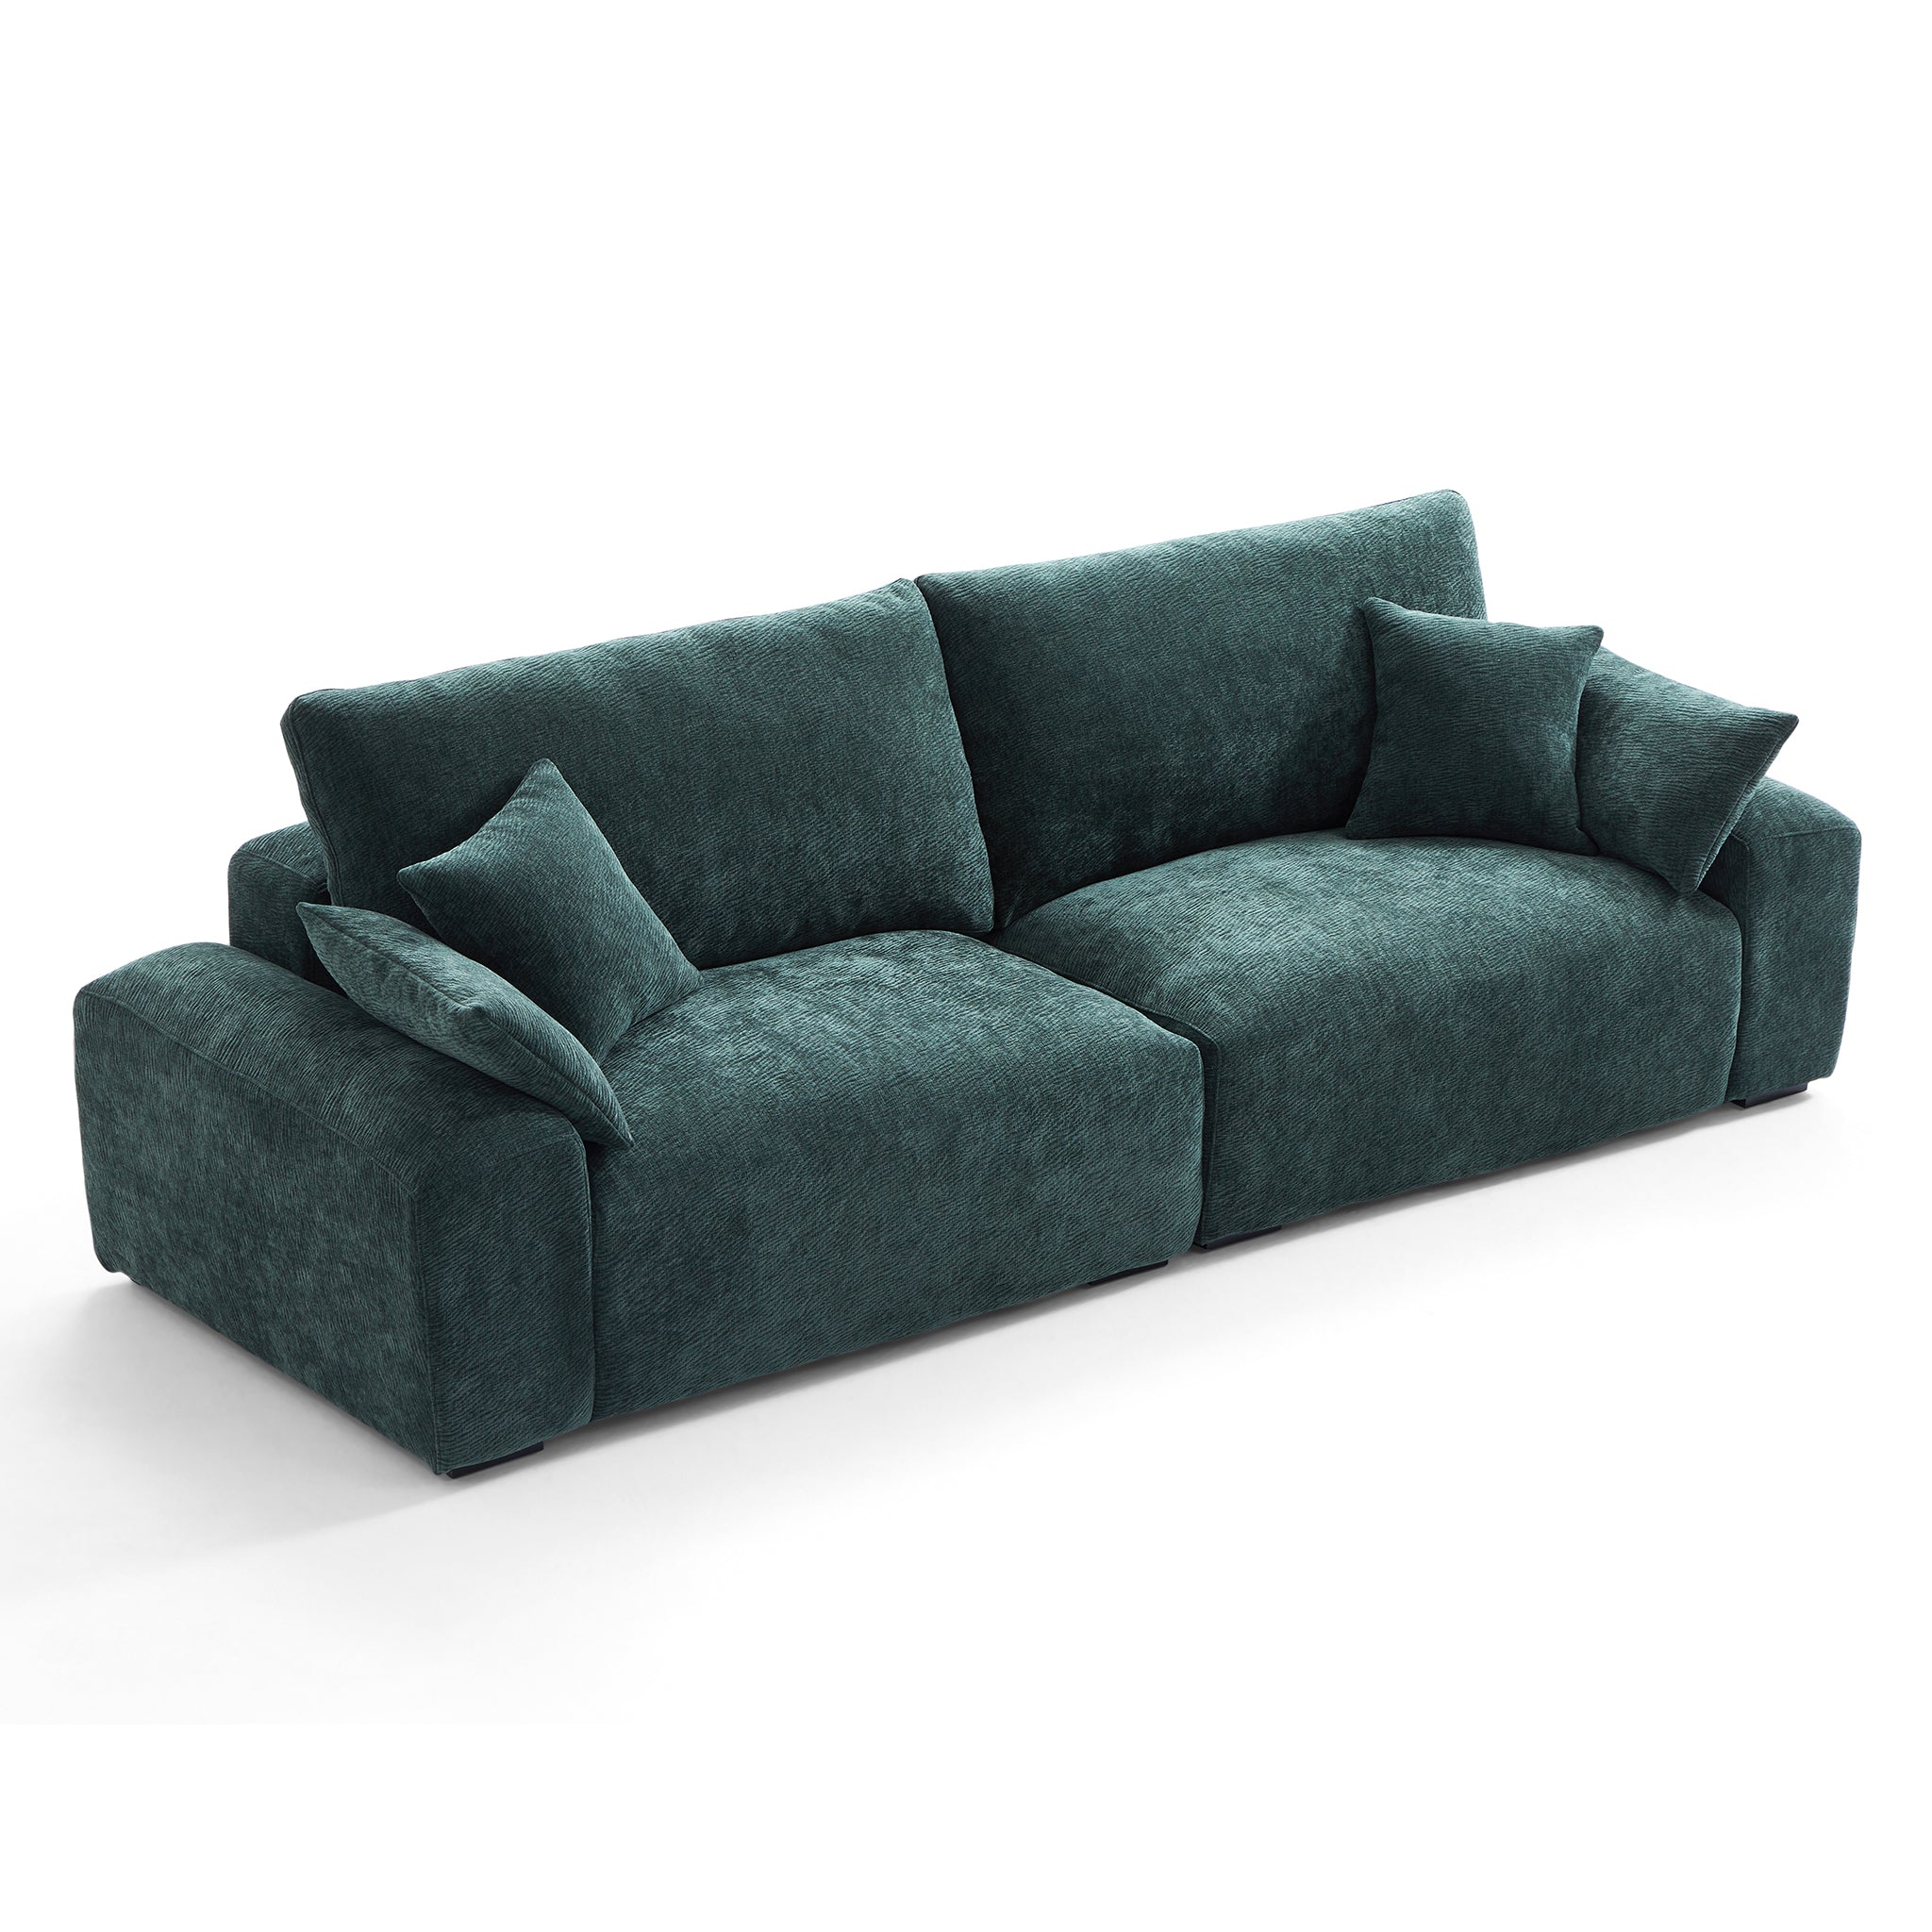 The Empress Green Sofa